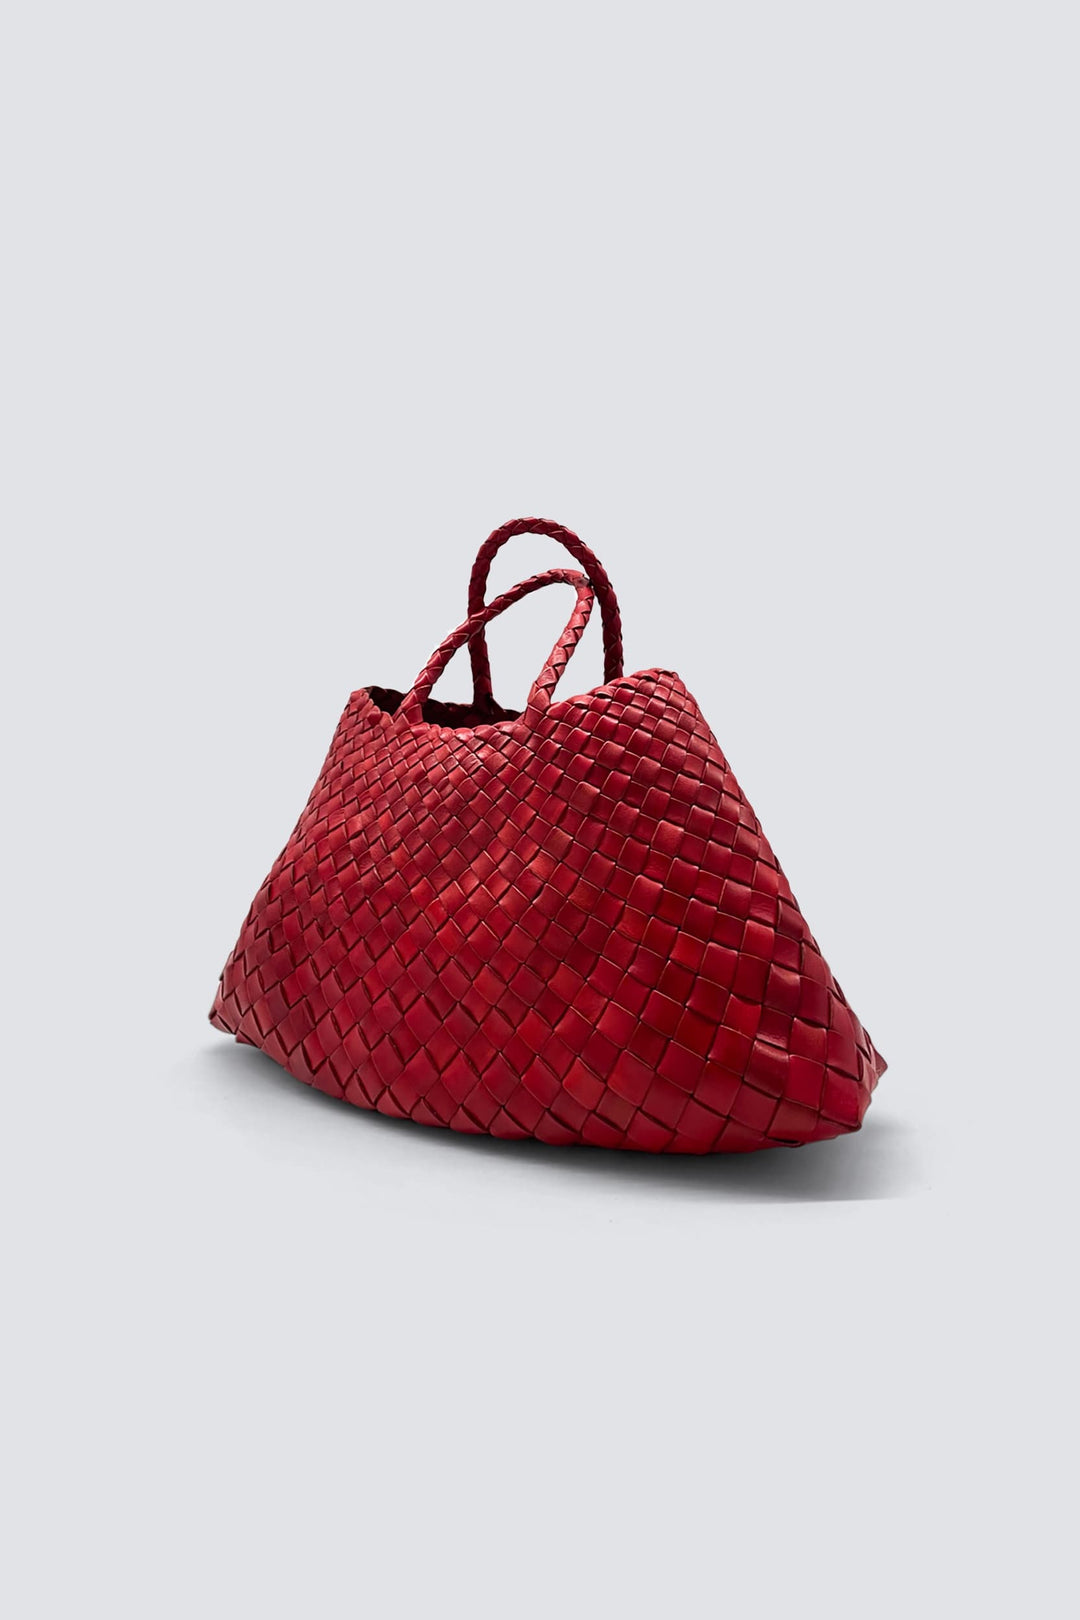 Dragon Diffusion - Santa Croce Big Red Woven Leather Bag